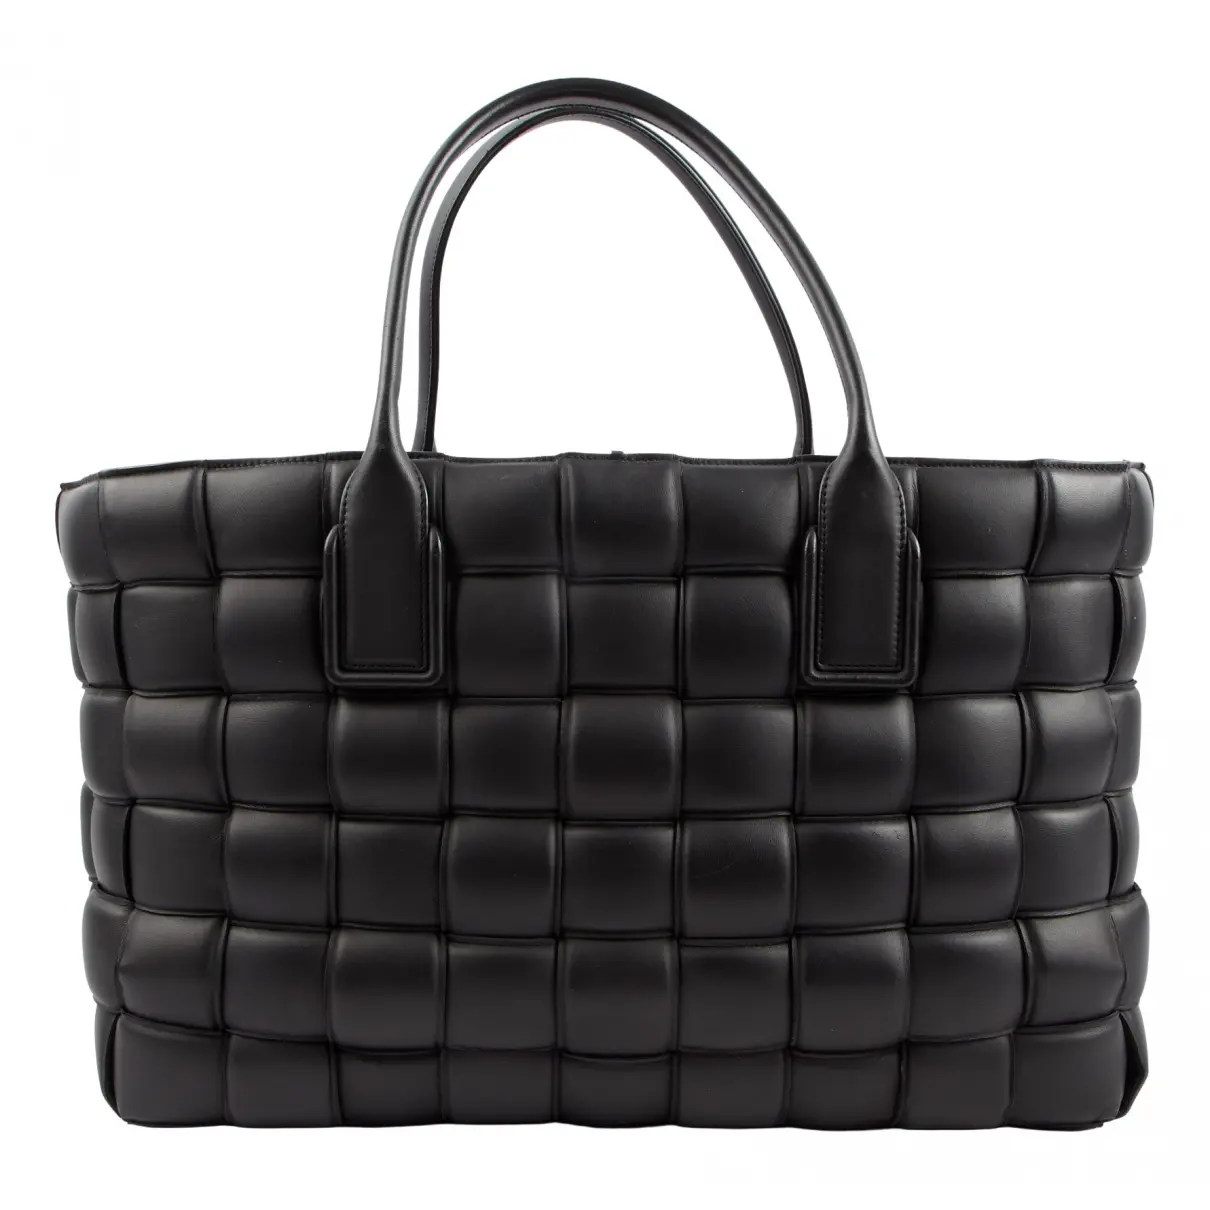 City Veneta leather handbag Bottega Veneta